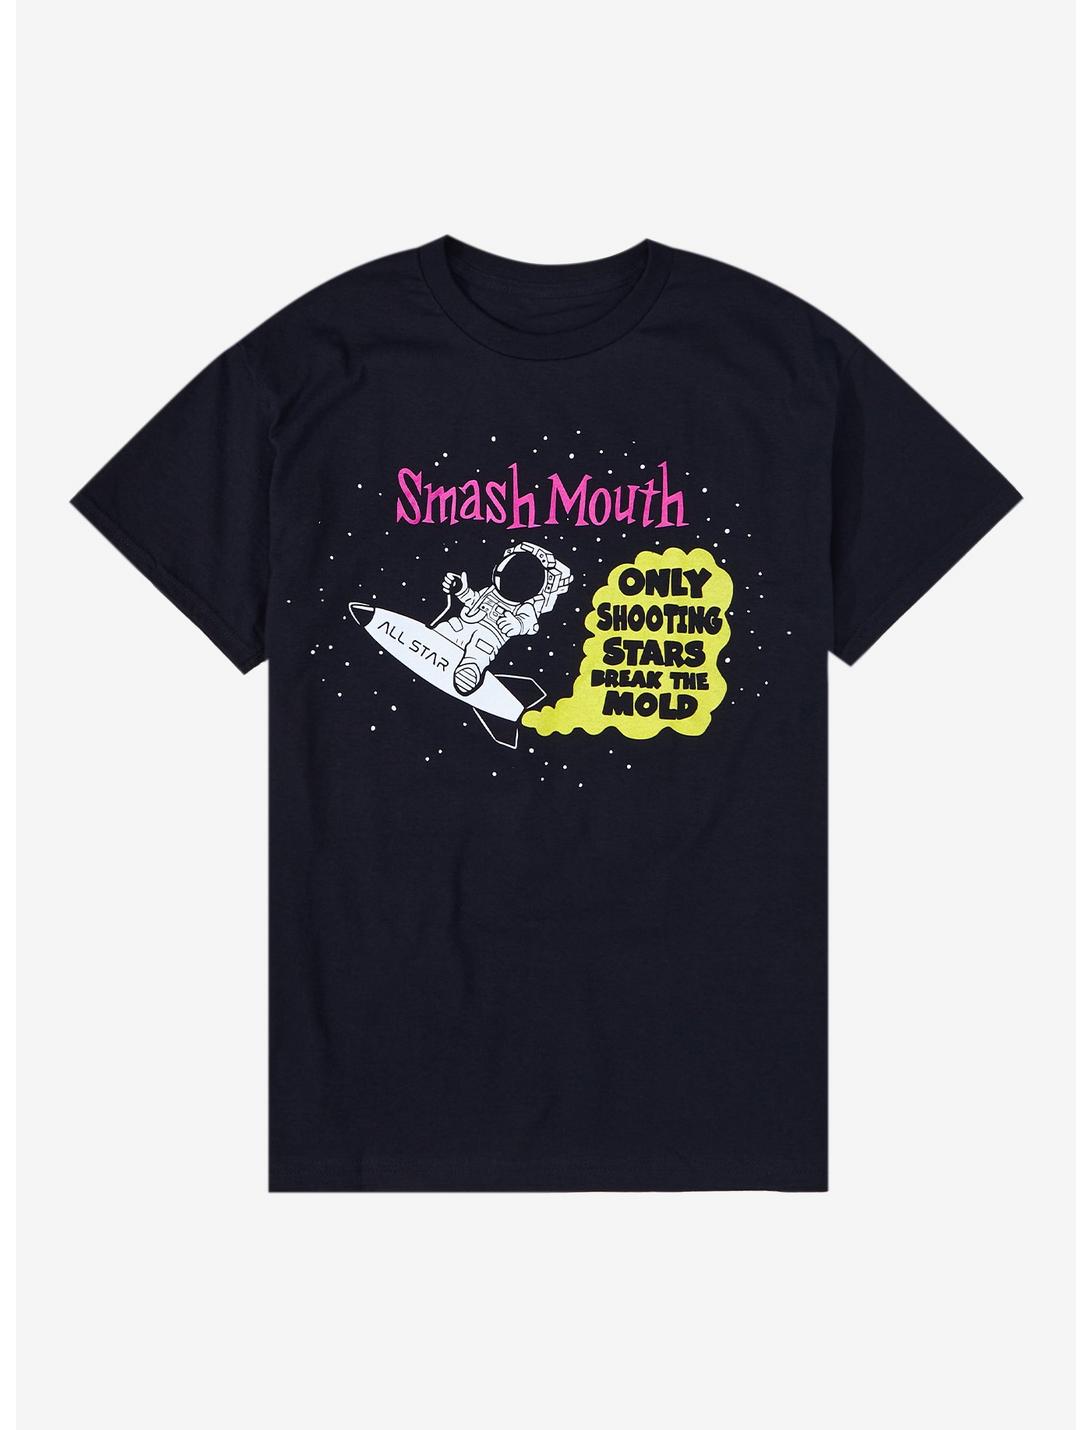 Tak for din hjælp Modstand debitor Smash Mouth Shooting Stars T-Shirt | Hot Topic